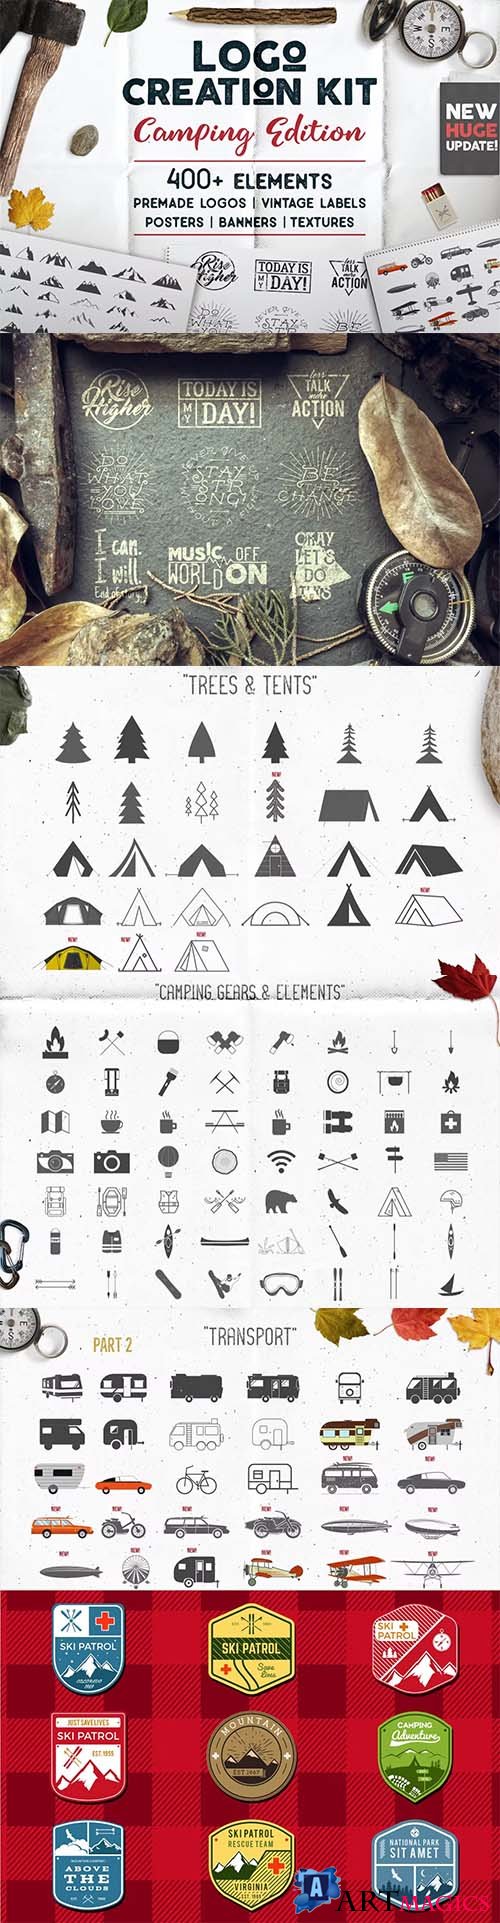 Logo Template Creation Kit - Camping Edition PSD